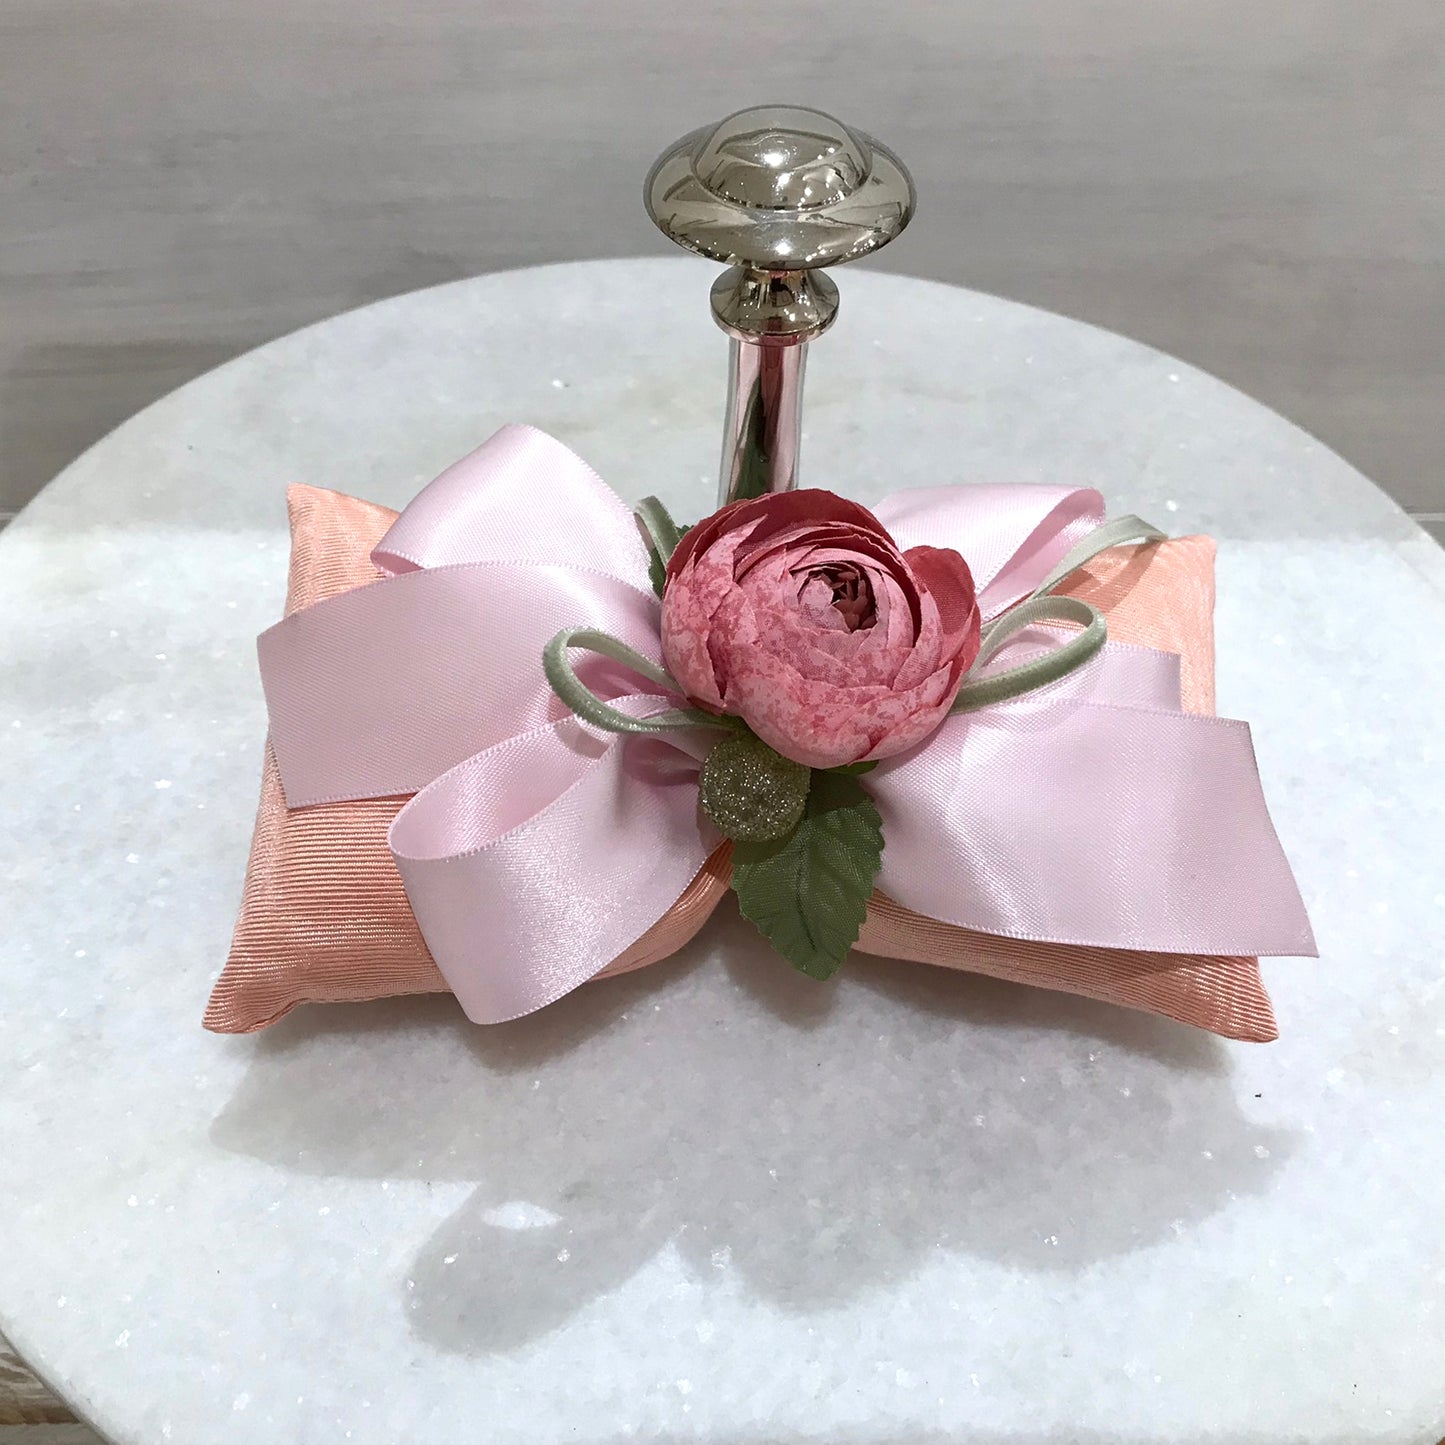 Ribbon Sachet with Small Peony Flower, Rose Scent Handmade Sachet